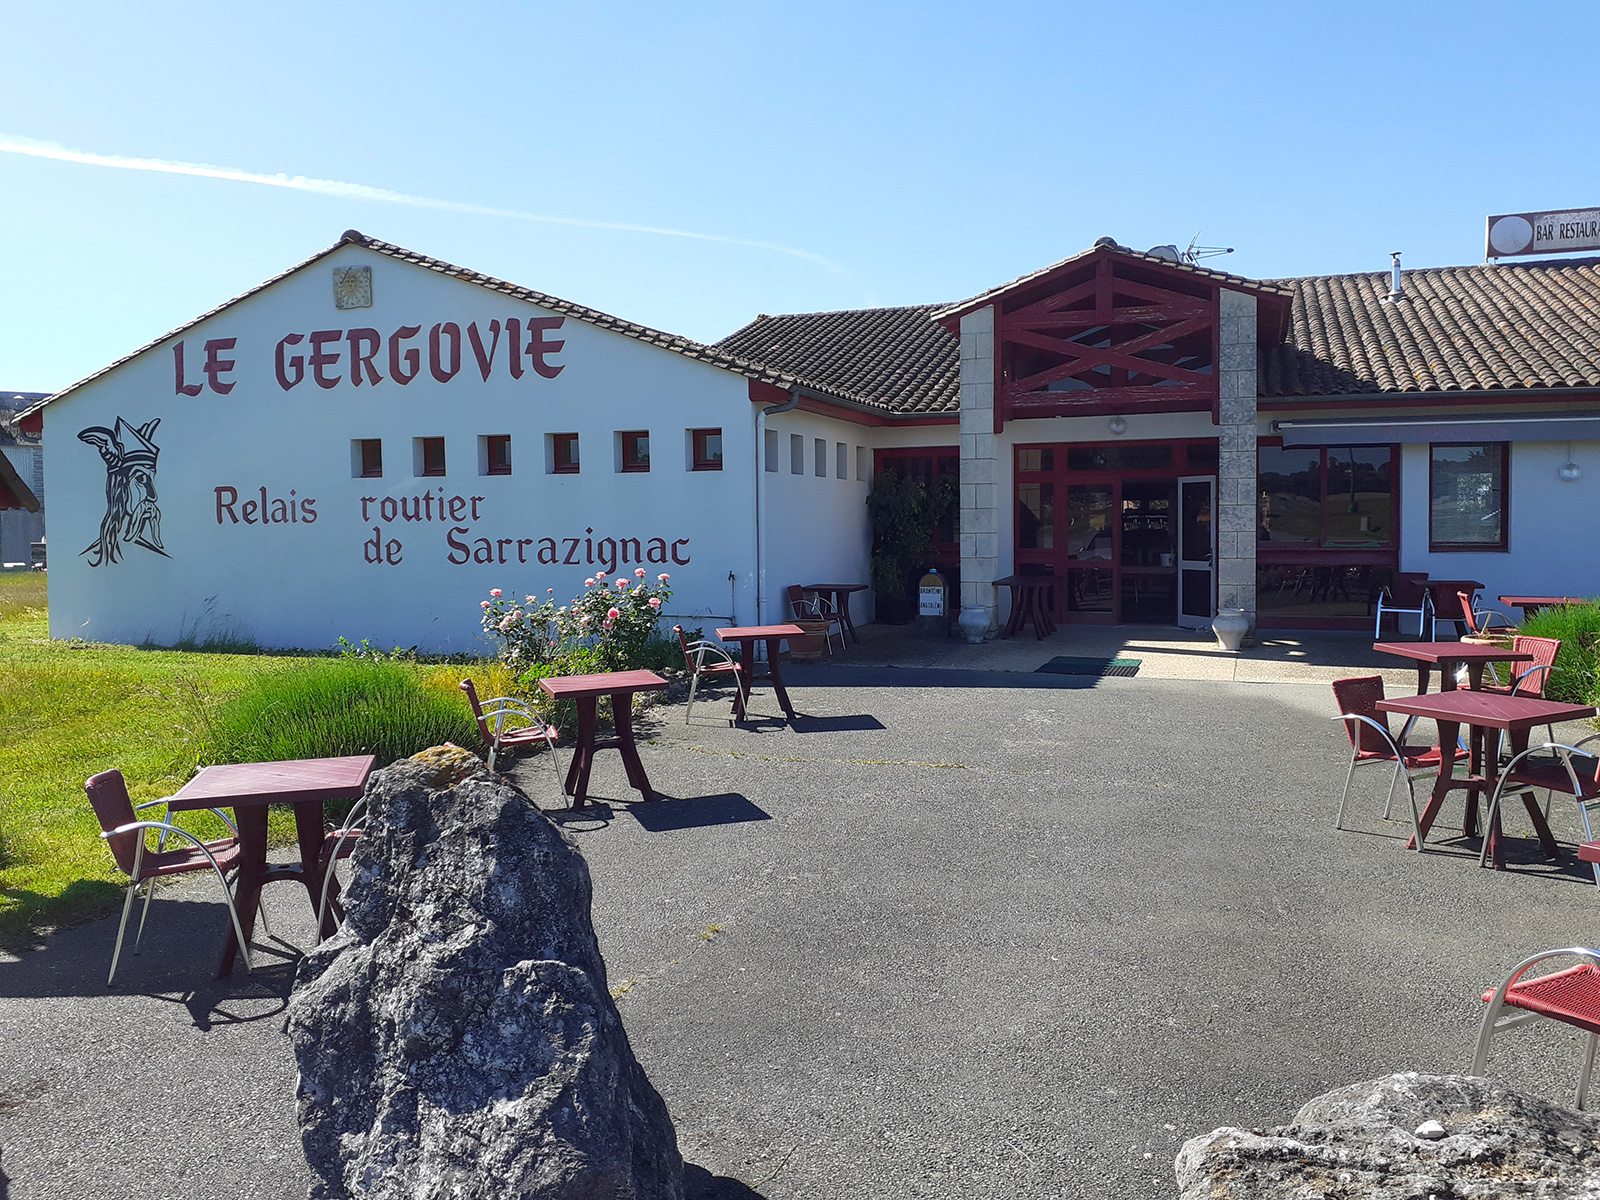 LE GERGOVIE - Restaurants in Brantôme - Guide du Périgord